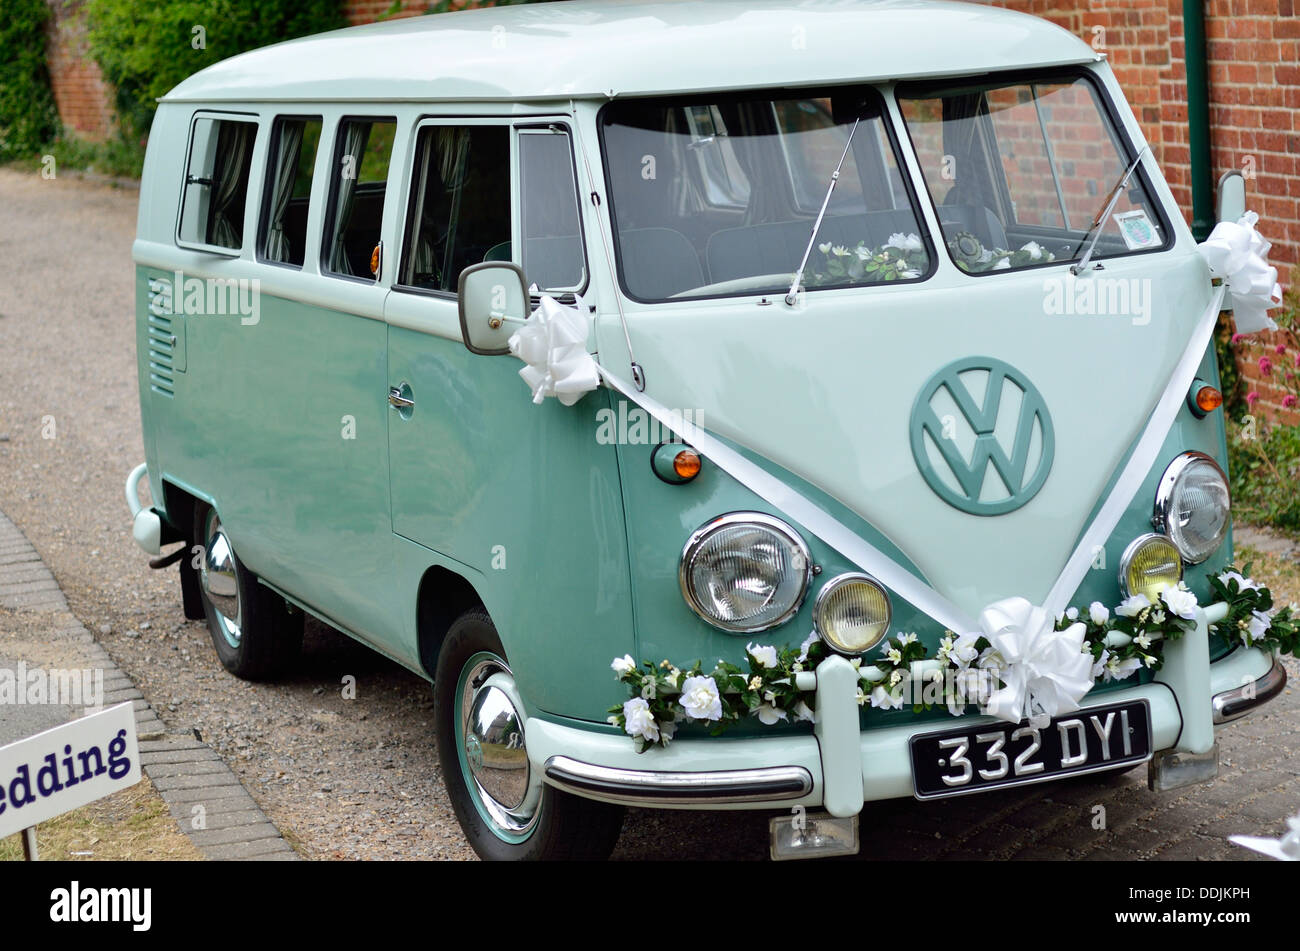 VW Camper Van wedding car Stock Photo 